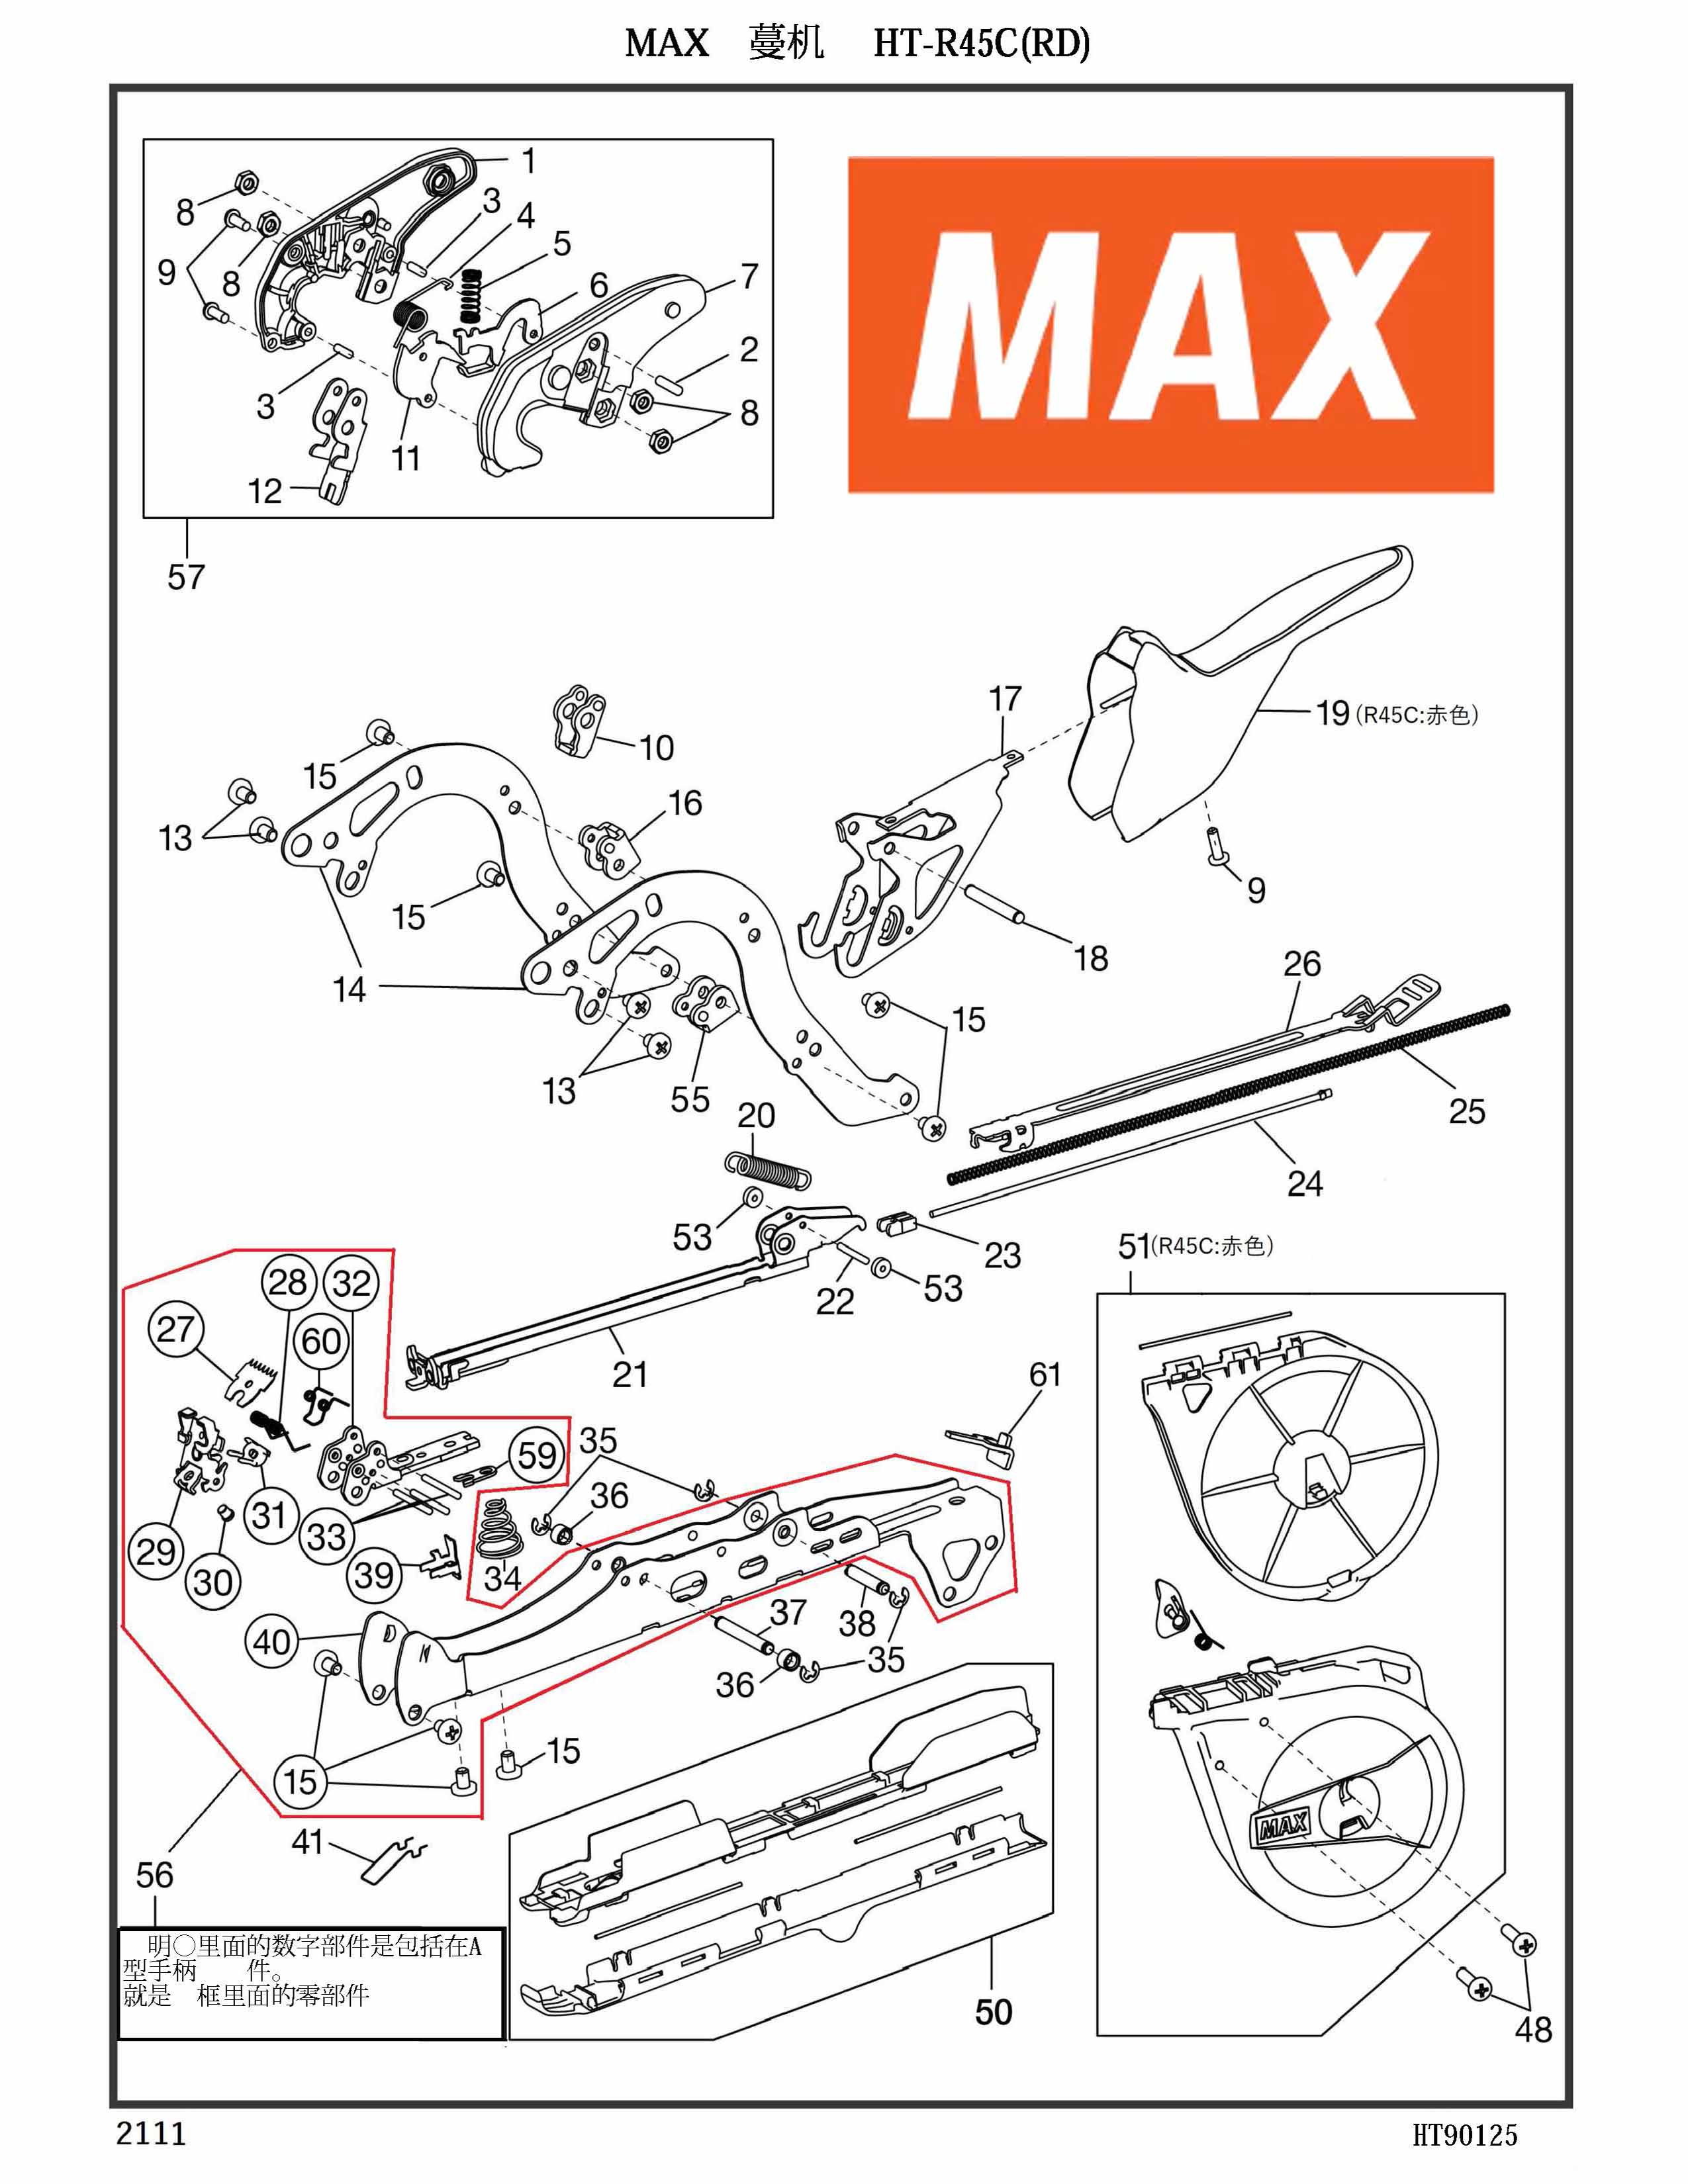 MAX Tapener Part FF41740 STEP PIN 1740(HT-R) Fits MAX HT-R45L(O) R45C(RD) HT-S45E HT-R1 HT-R2 #30